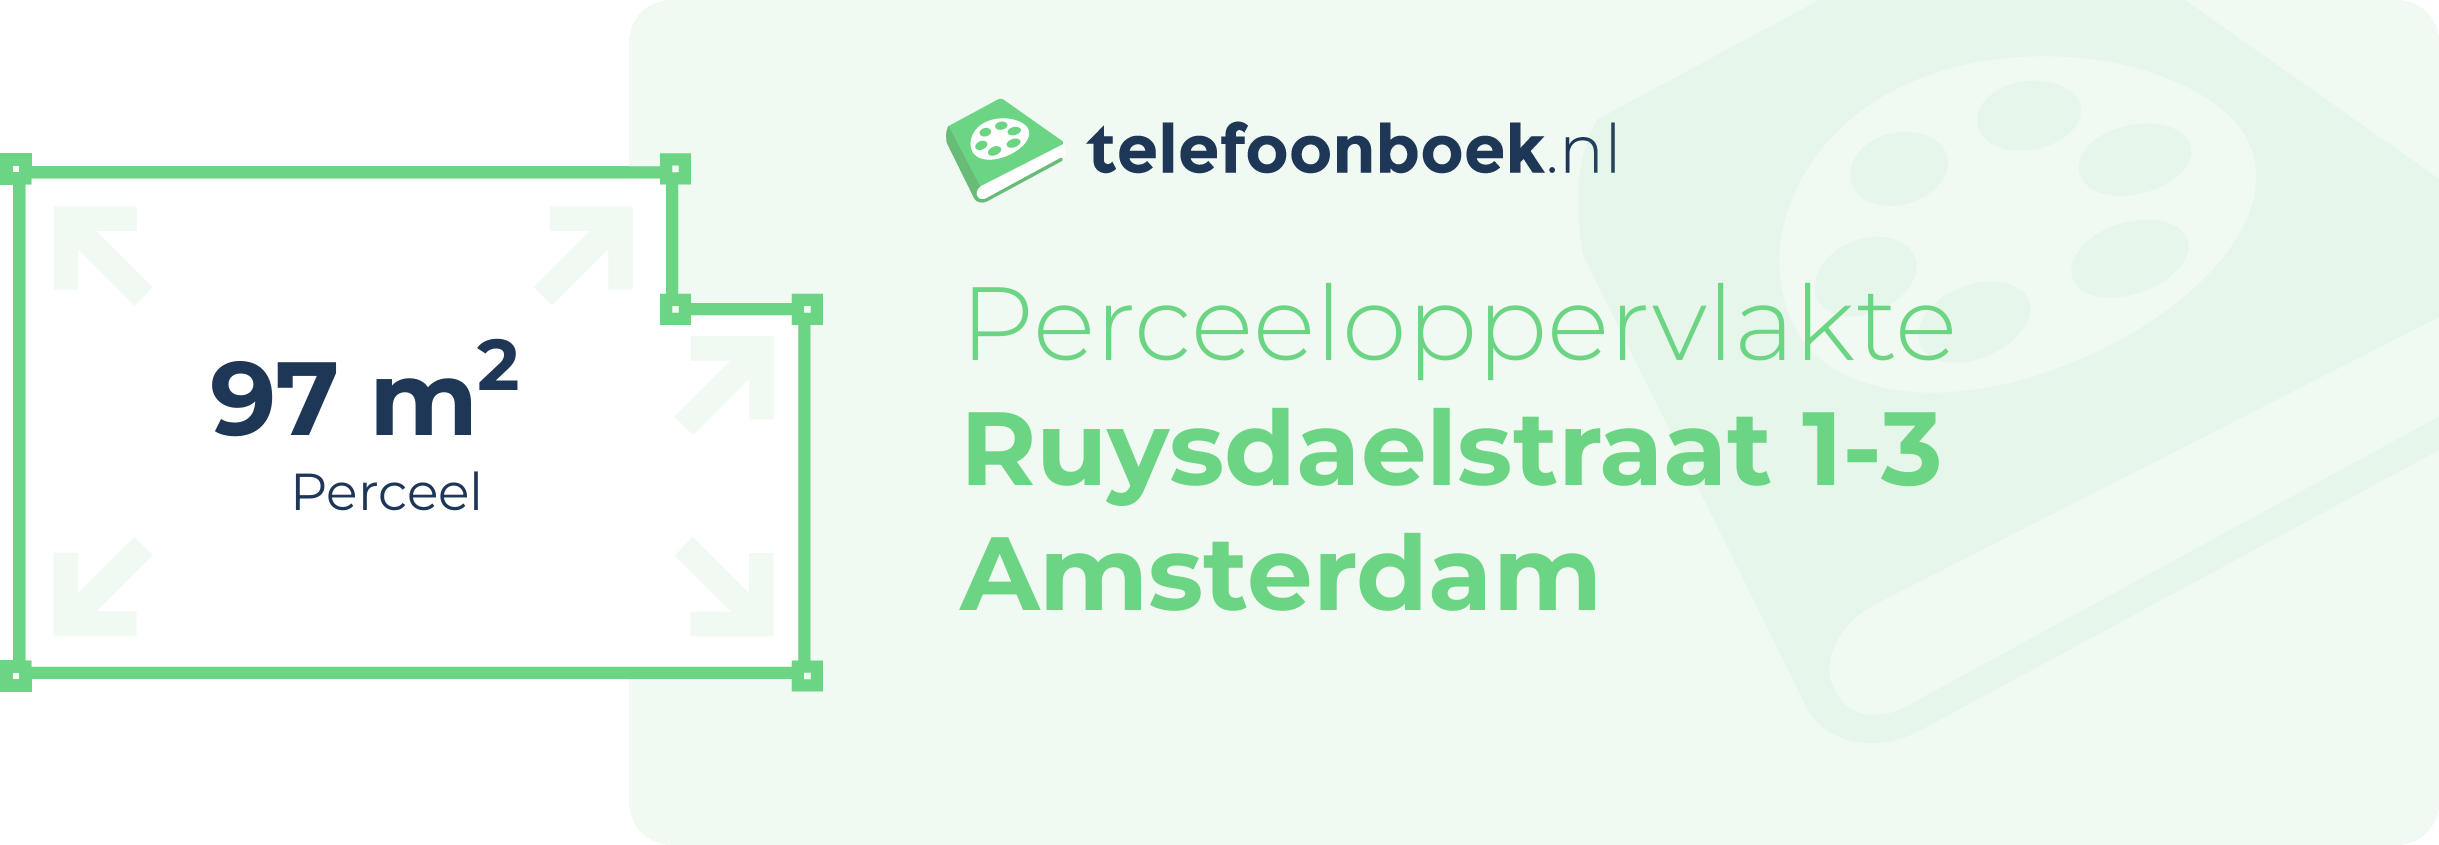 Perceeloppervlakte Ruysdaelstraat 1-3 Amsterdam